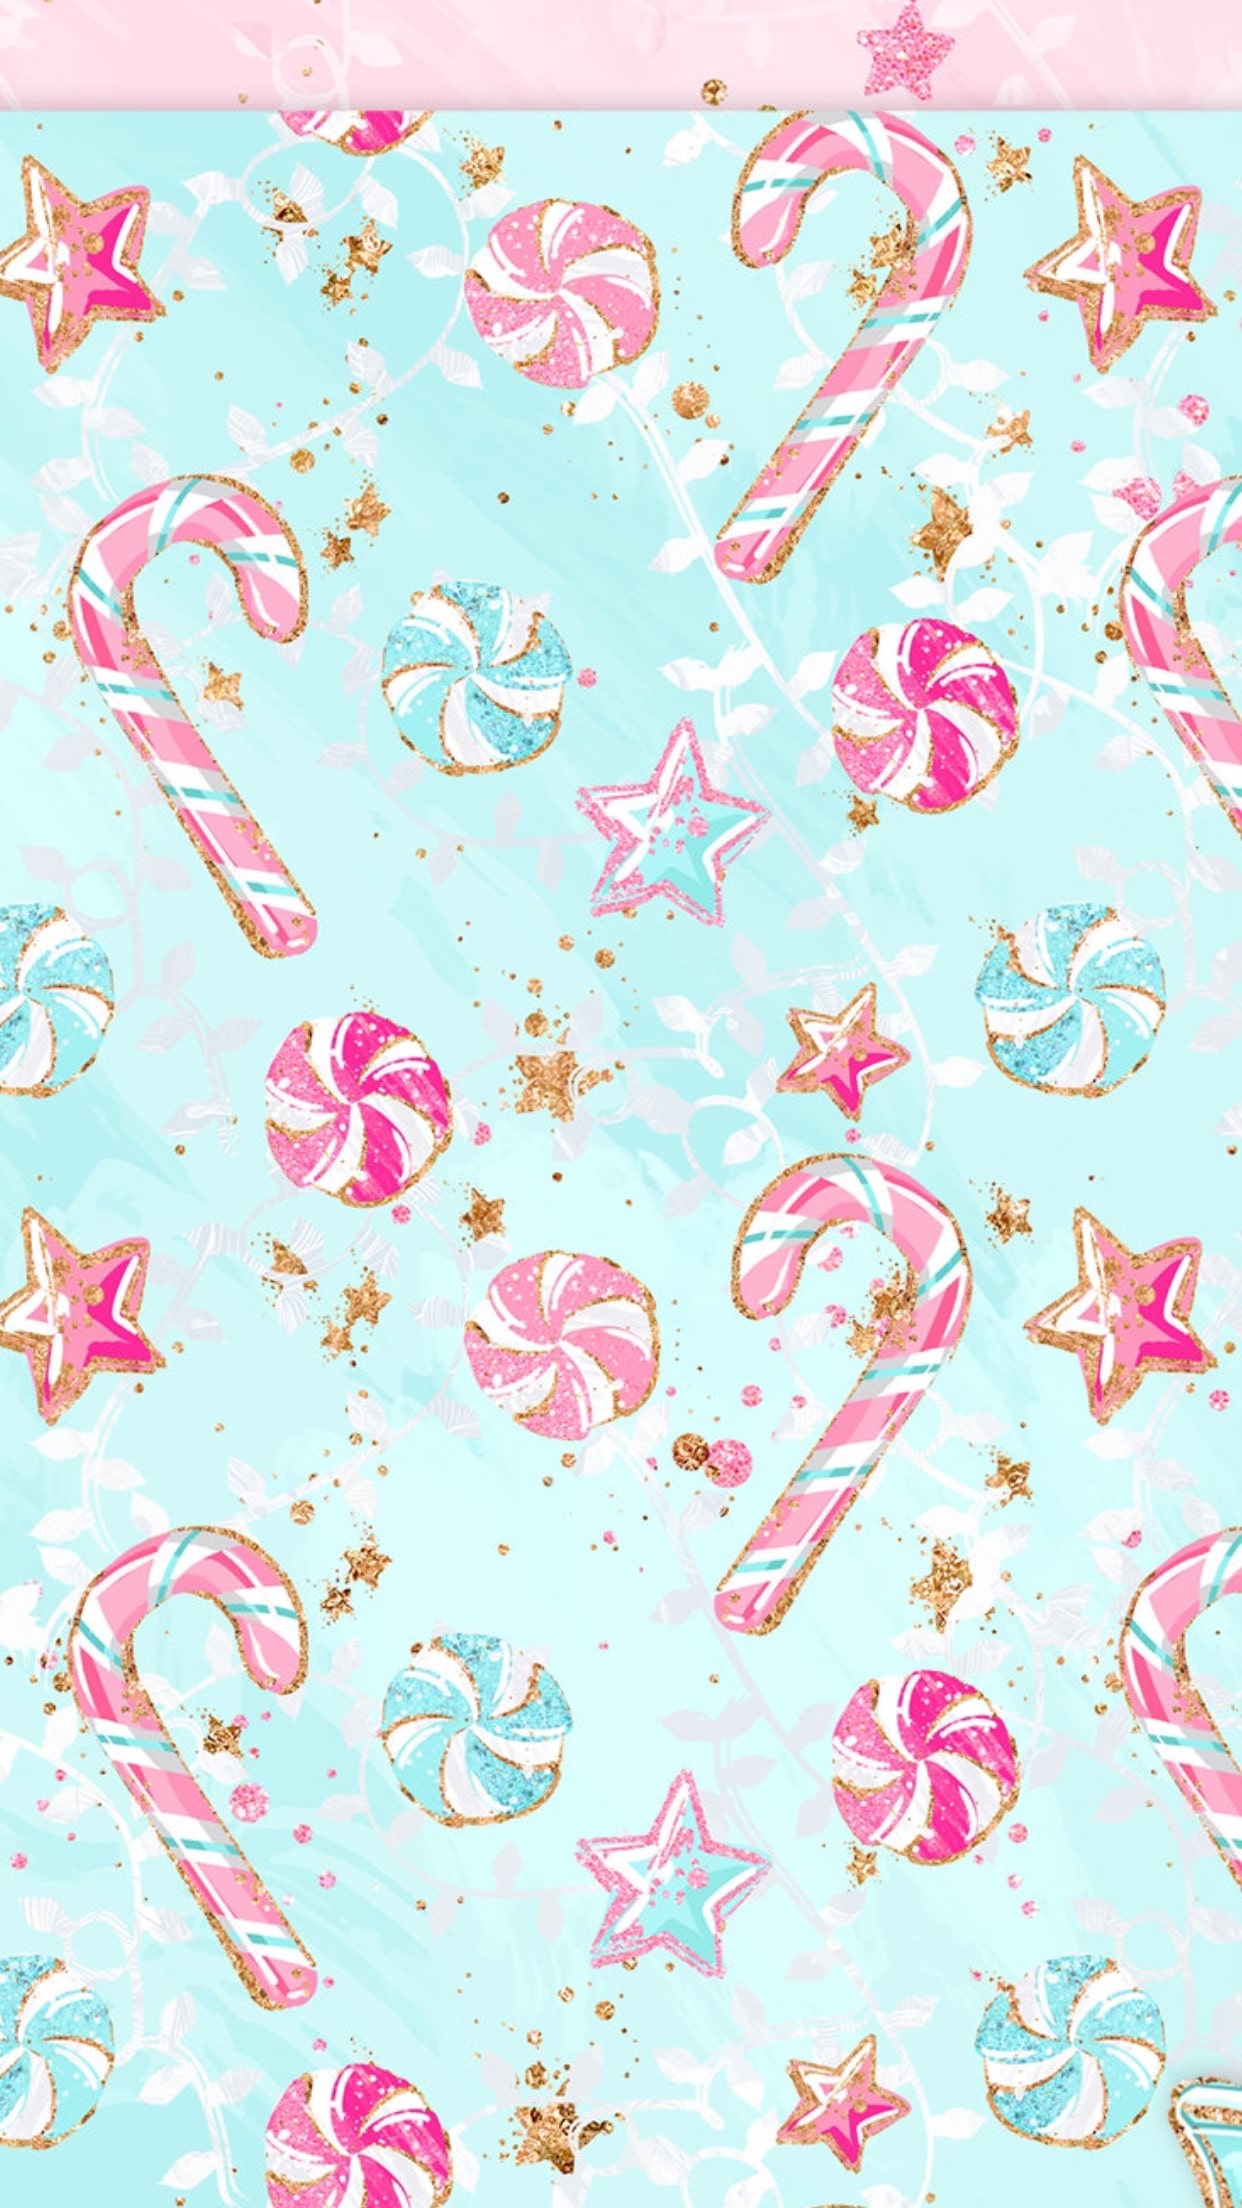 Cute Candy Cane Wallpaper